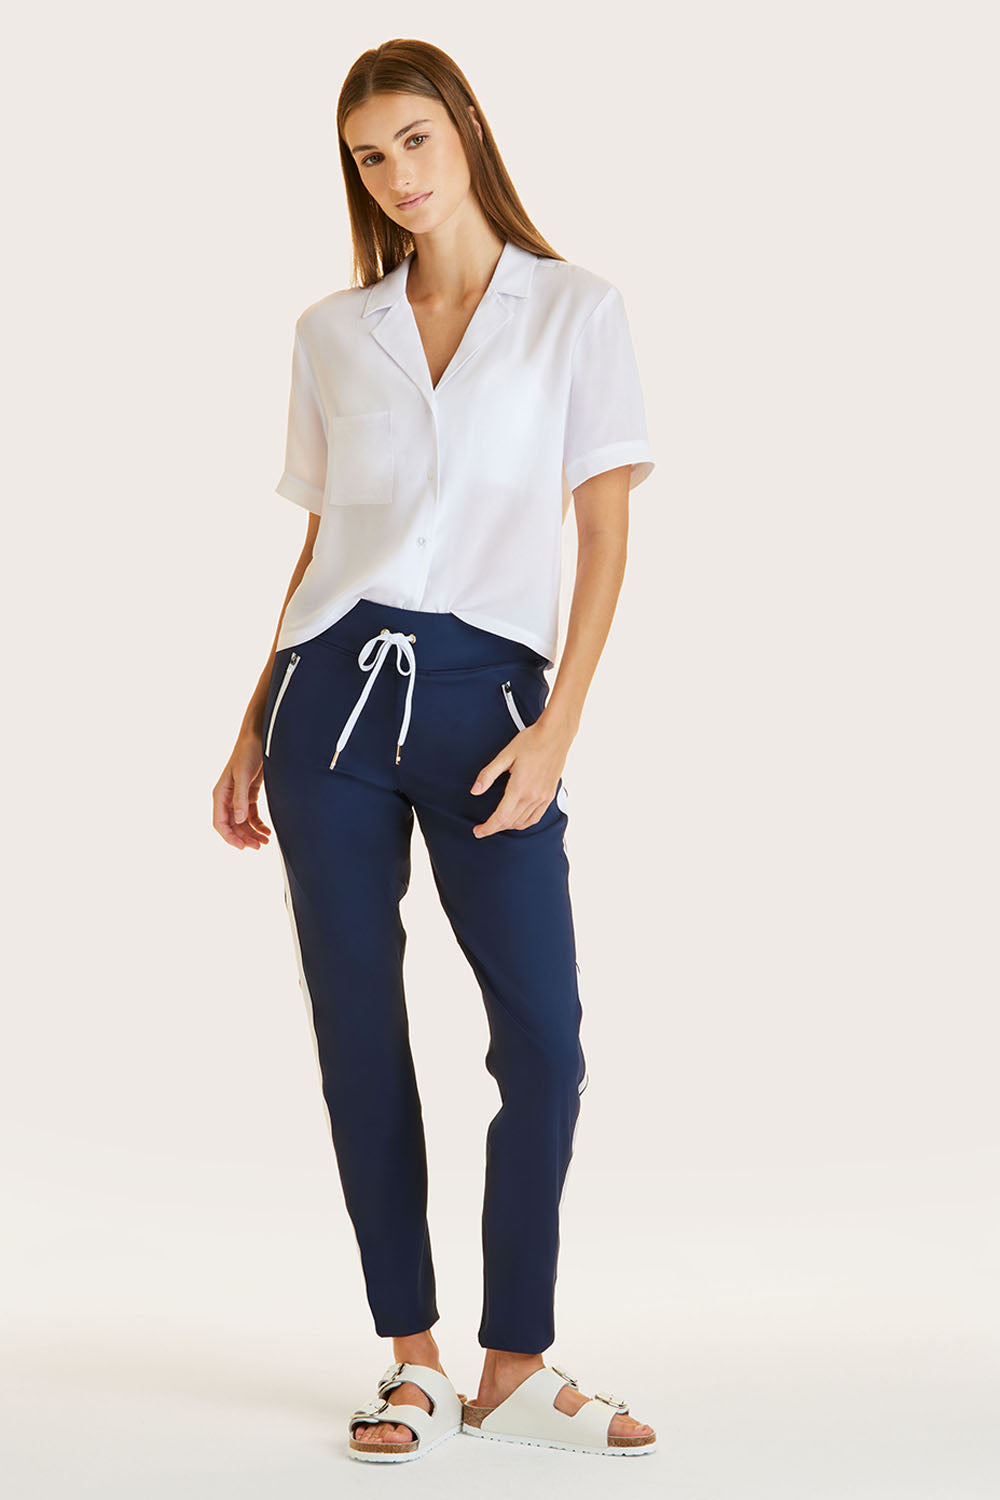 Lululemon Womens Navy Blue Work/Dress Pants Stretchy Slacks Size 6